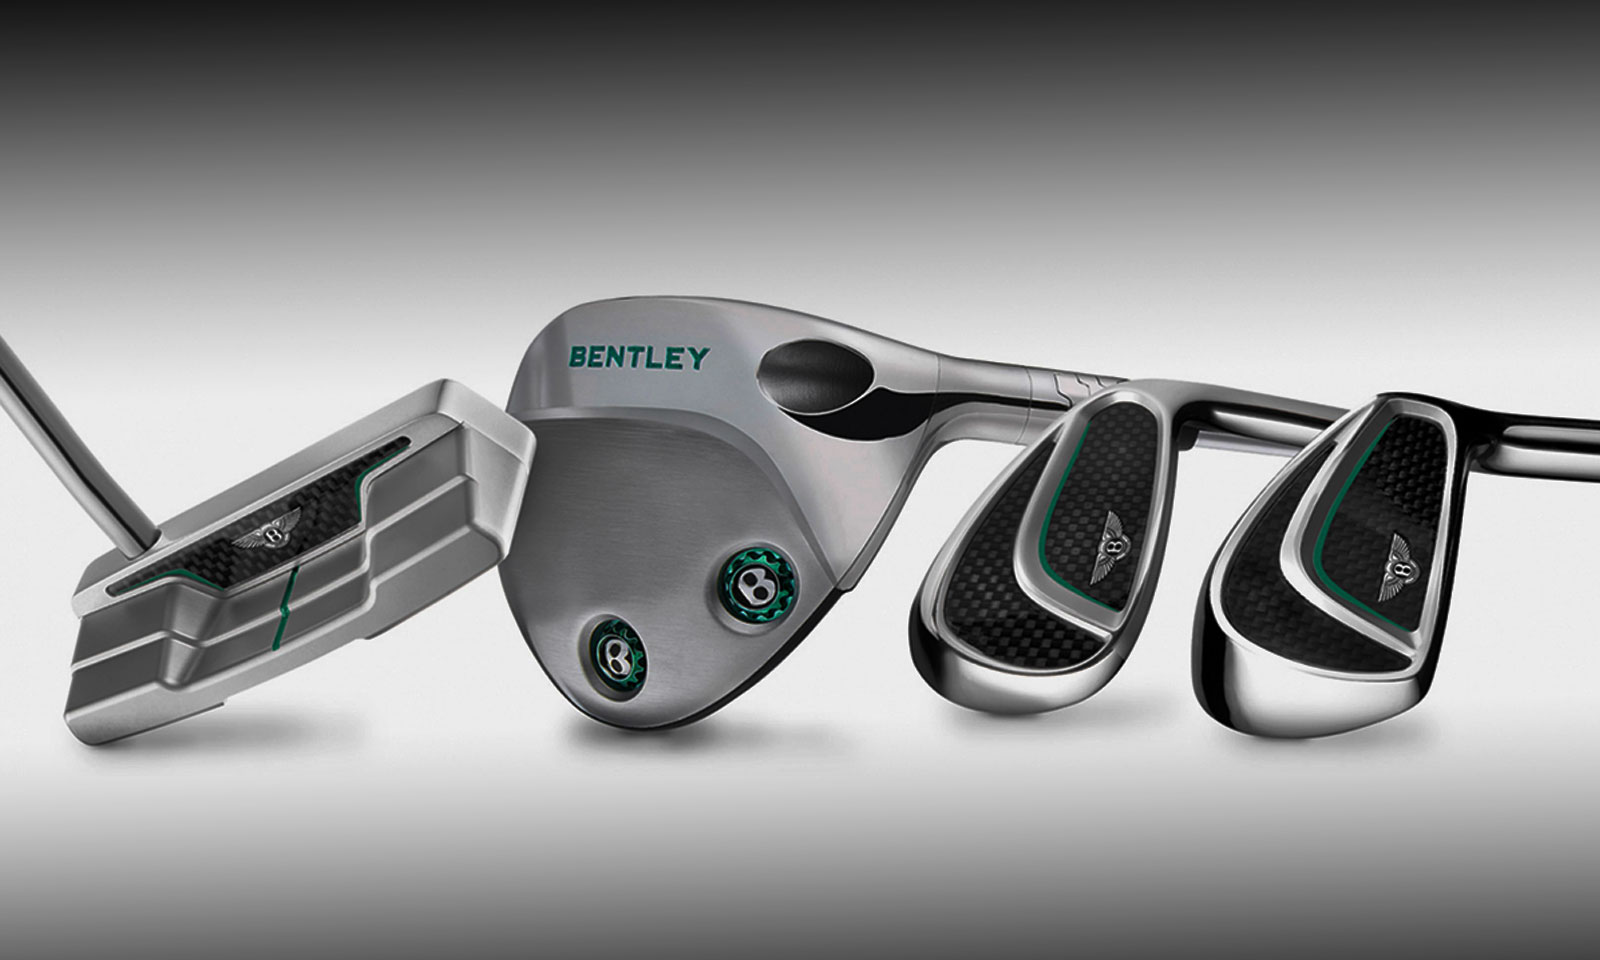 Bentley golf clubs